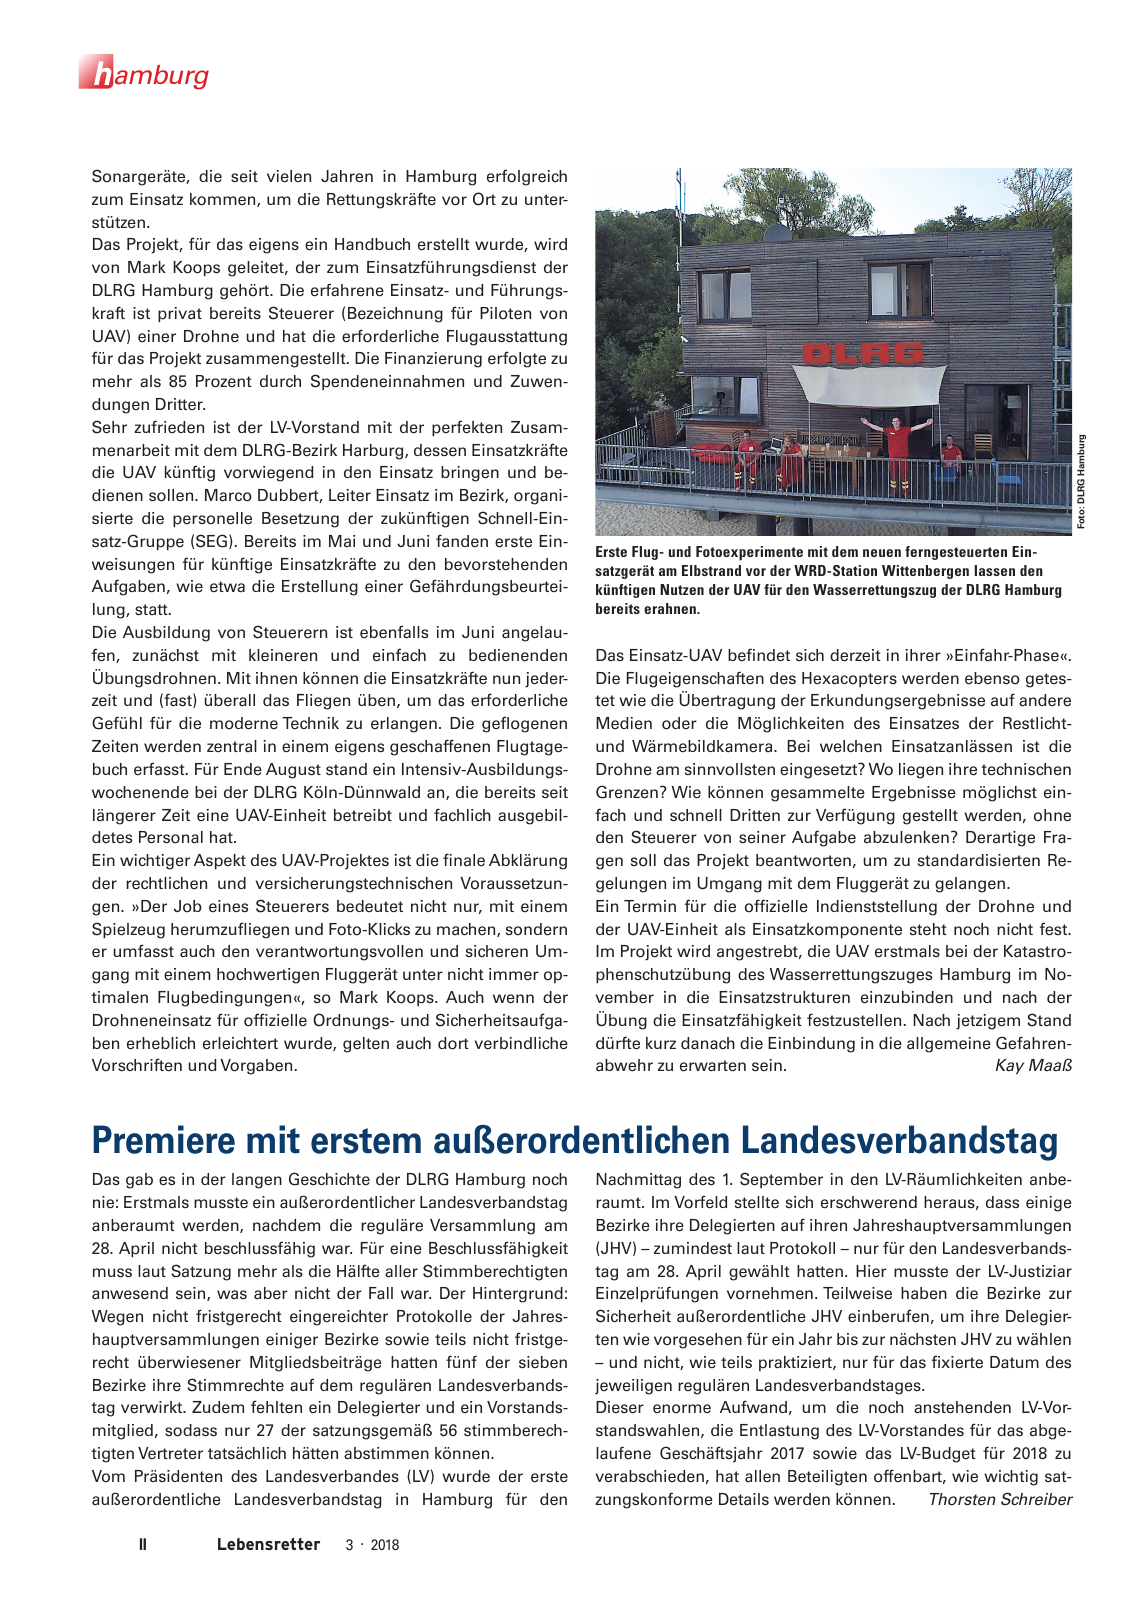 Vorschau Lebensretter 3/2018 - Regionalausgabe Hamburg Seite 4